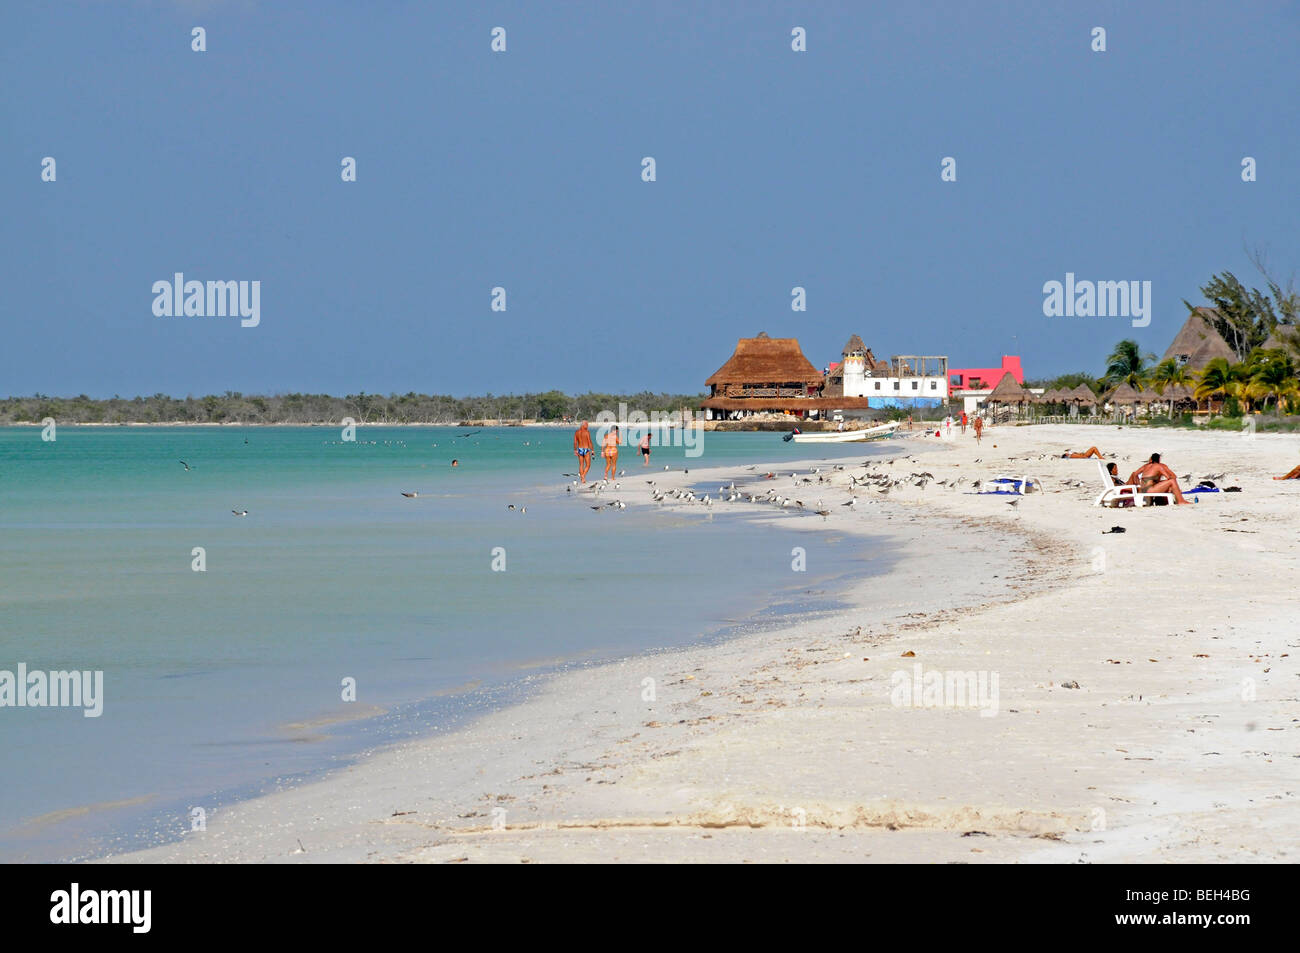 Beach of Holbox Island, Yucatan Peninsula, Caribbean Sea, Mexico Stock Photo